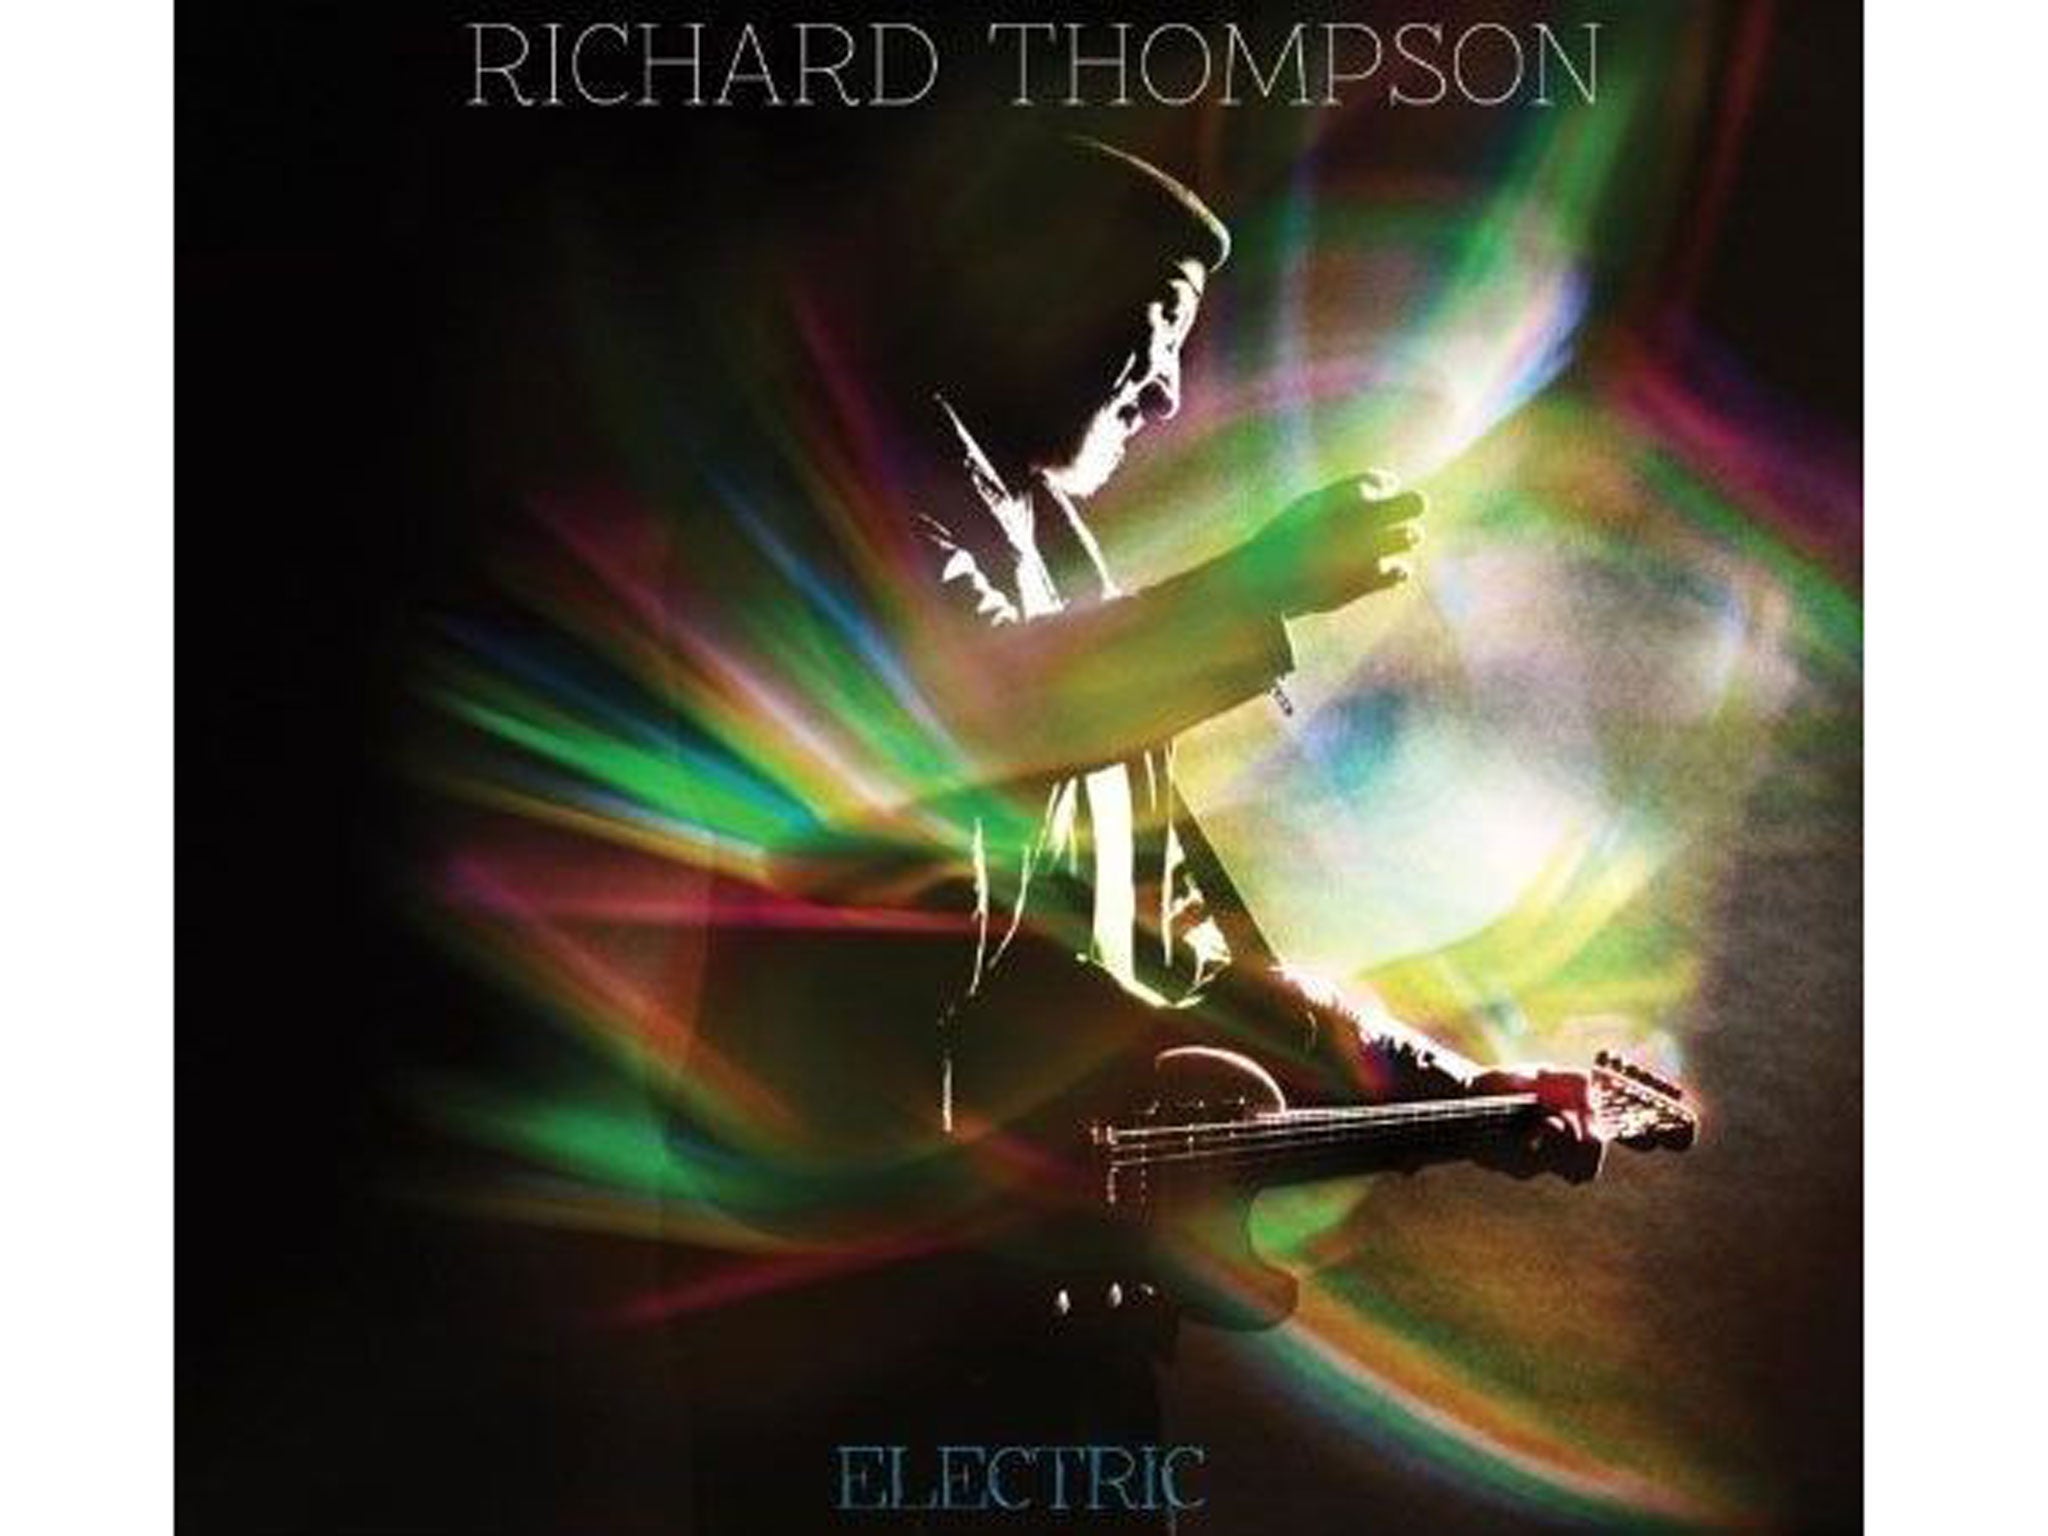 Richard Thompson, Electric (Proper)